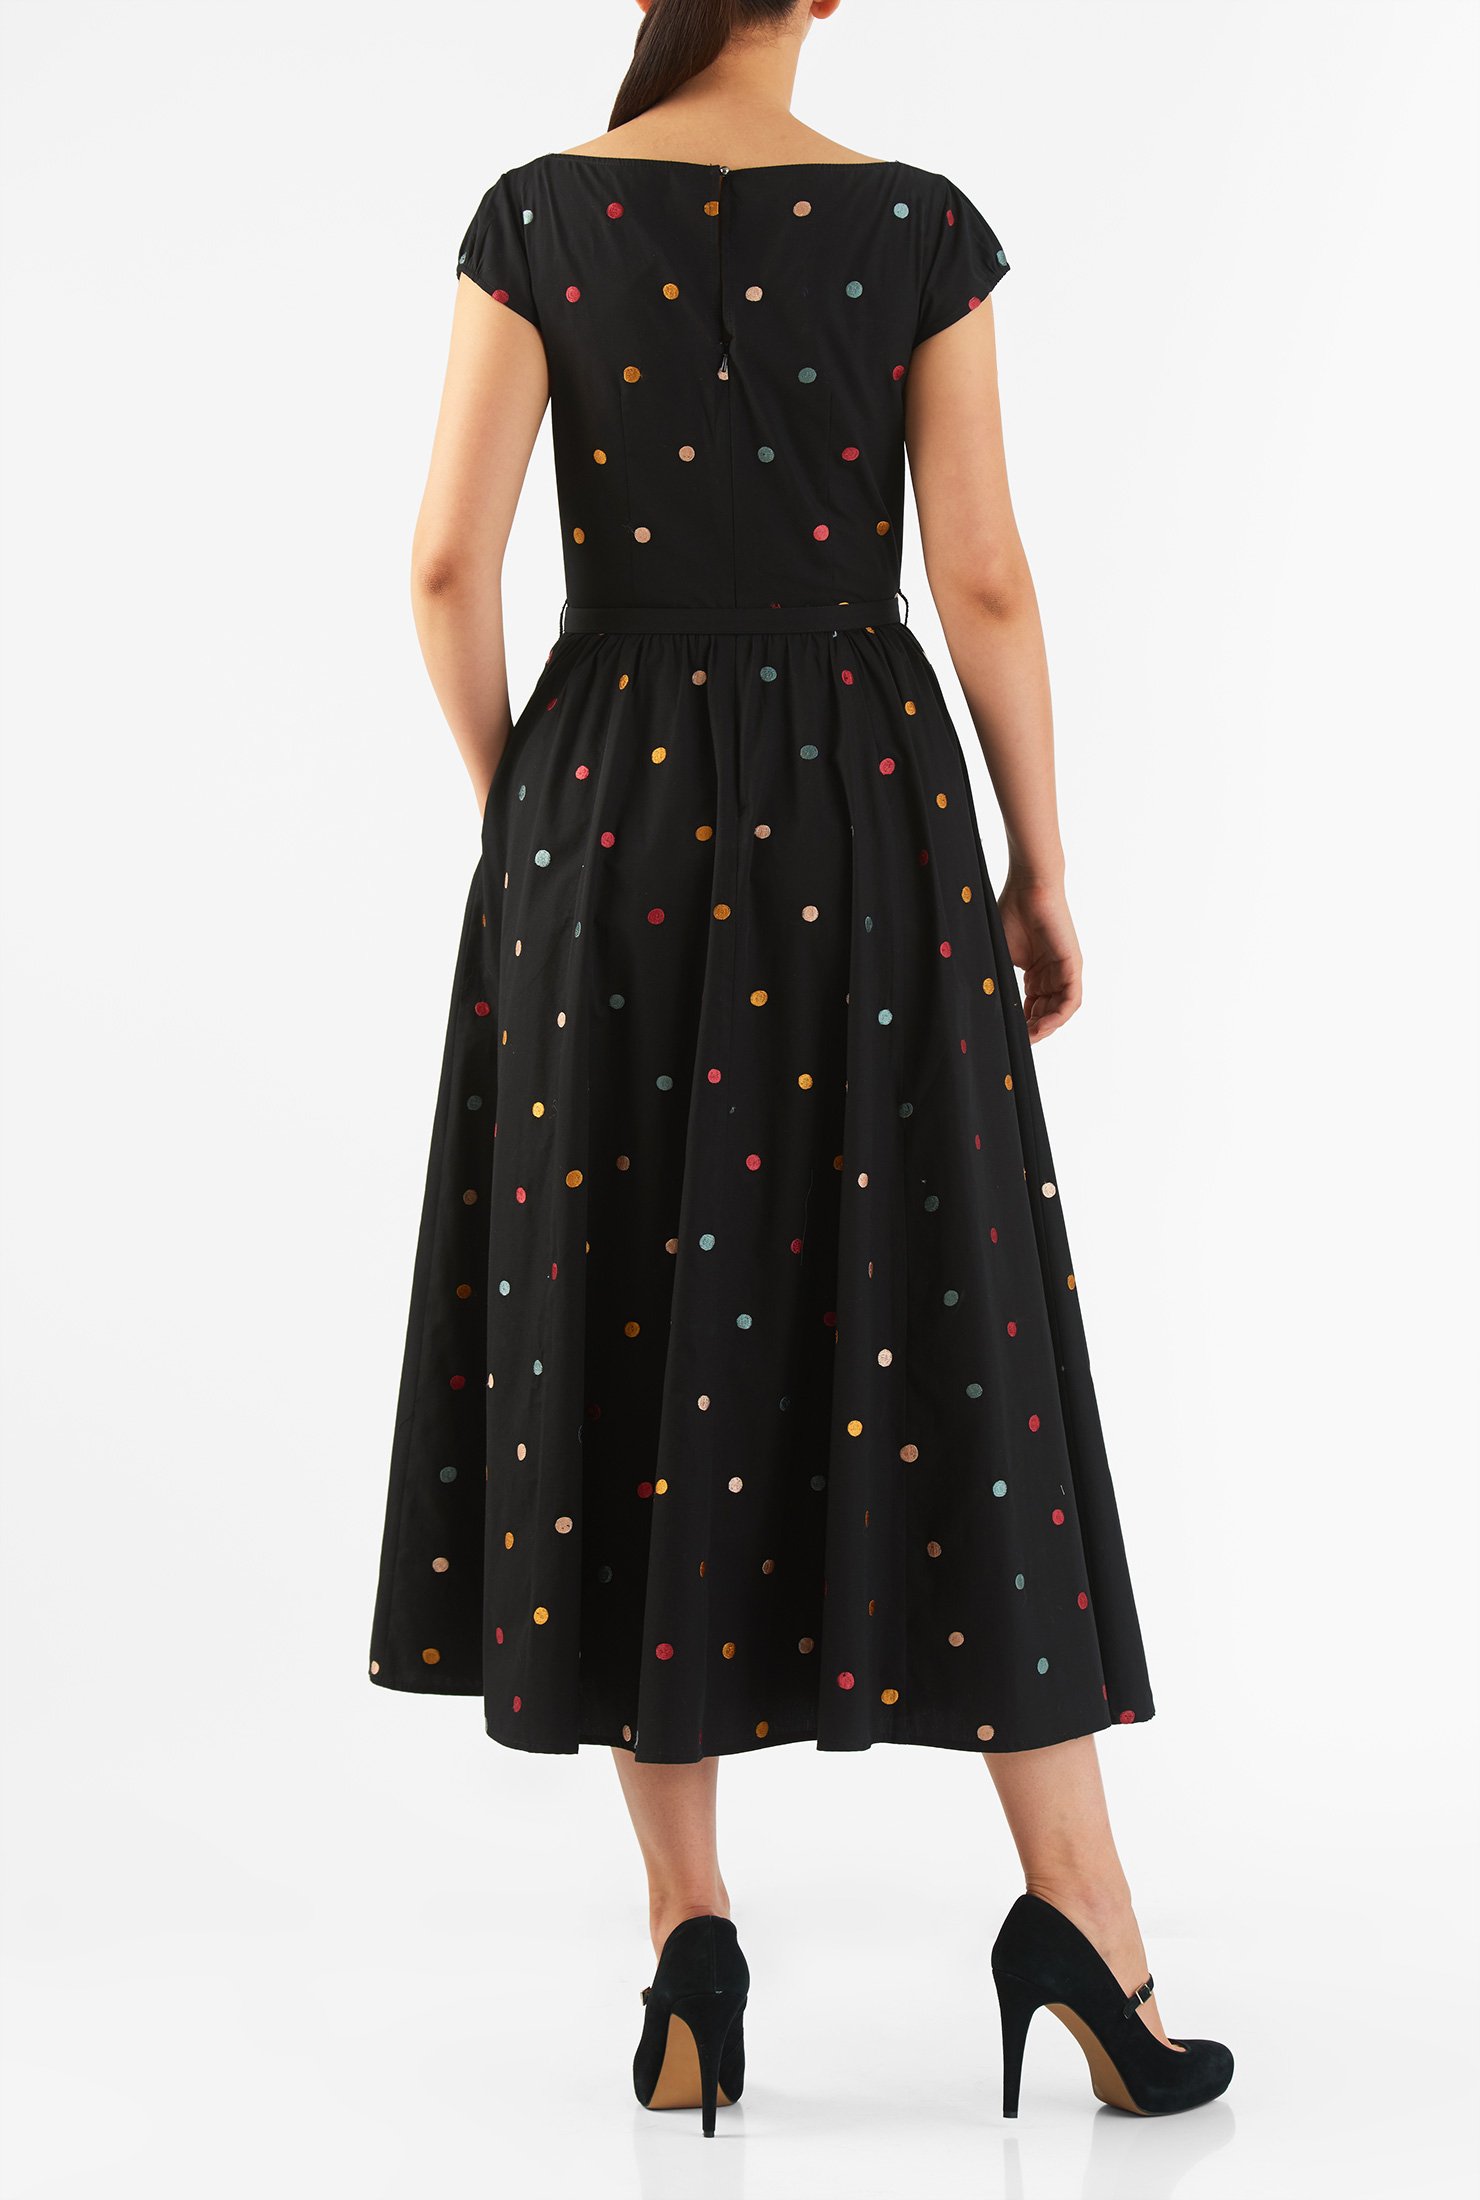 Shop Polka dot embellished poplin dress | eShakti